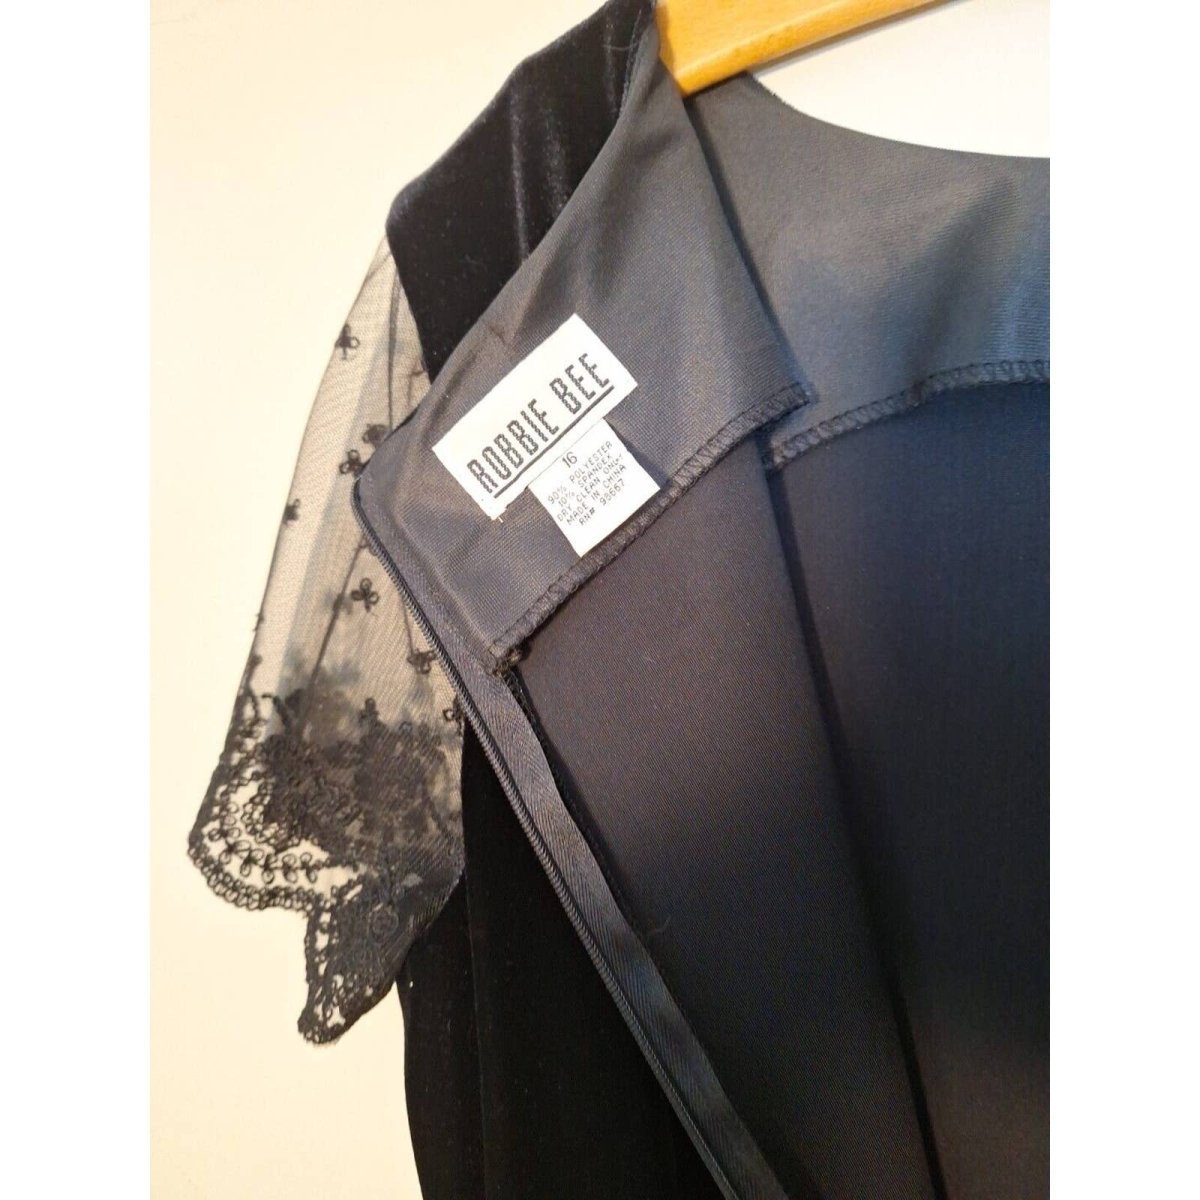 Vintage 90s Mesh Sleeve Black Velvet Maxi Dress Women Size 16 - themallvintage The Mall Vintage